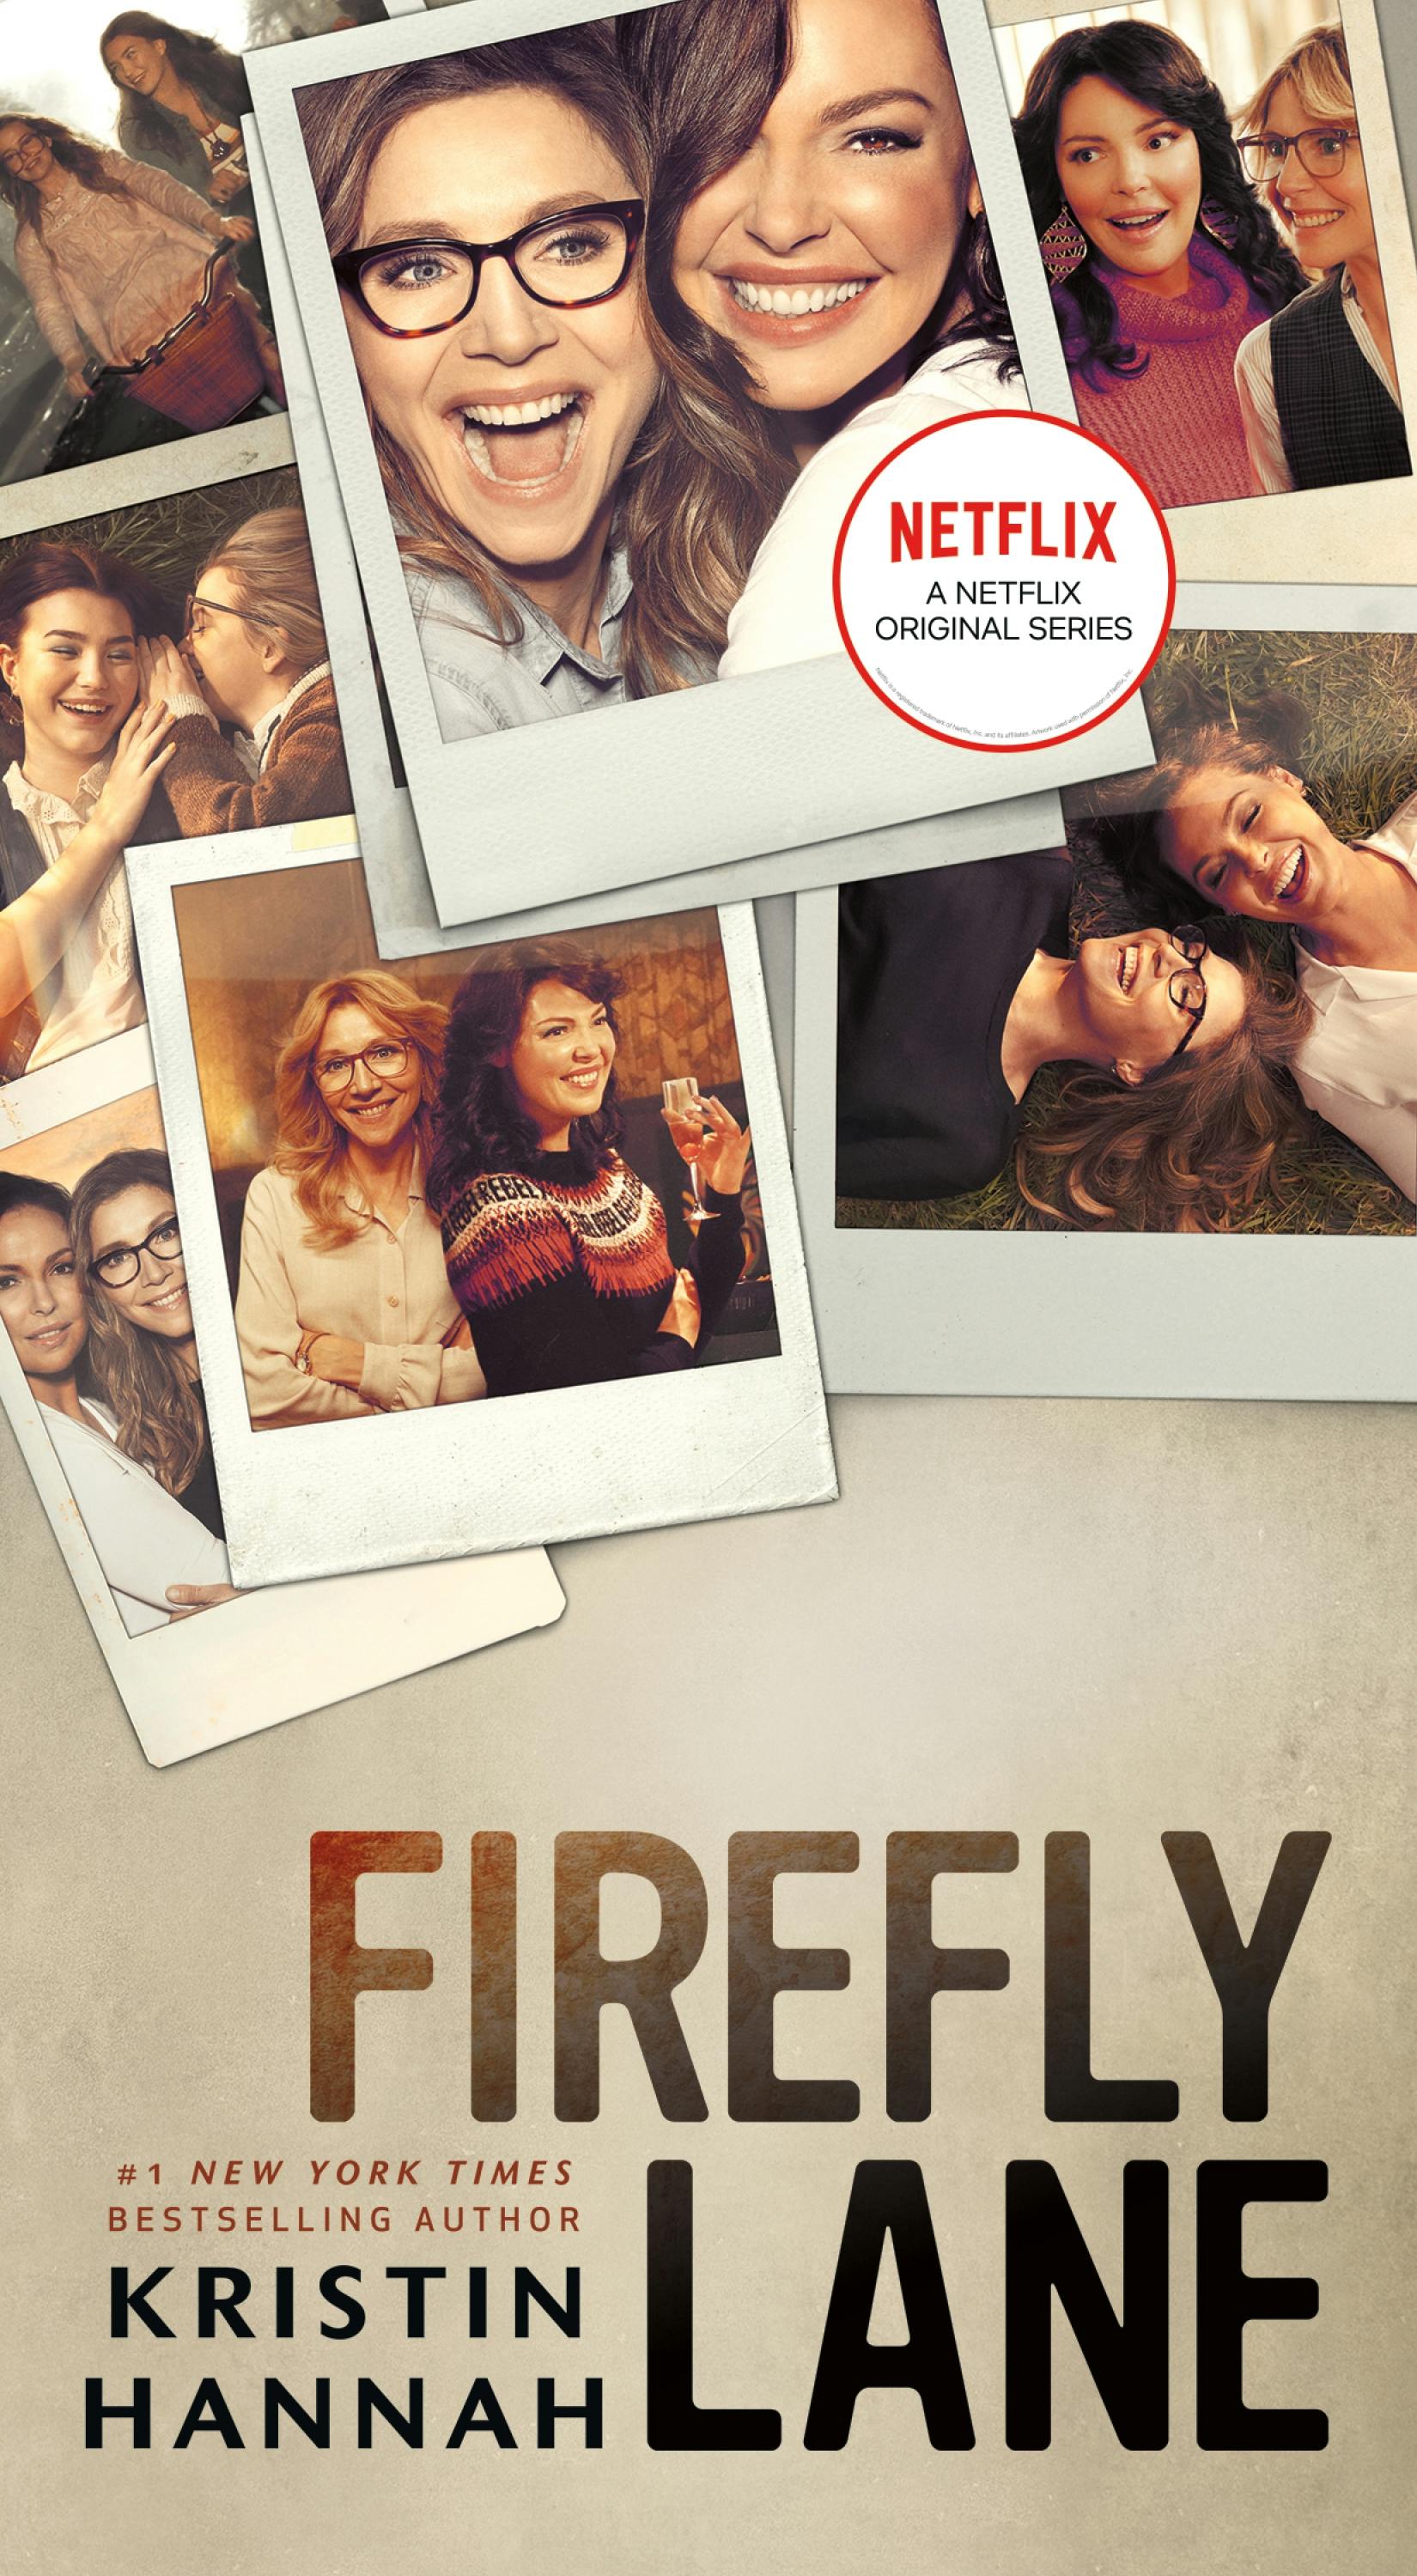 added chapter 2 season 2 firefly lane